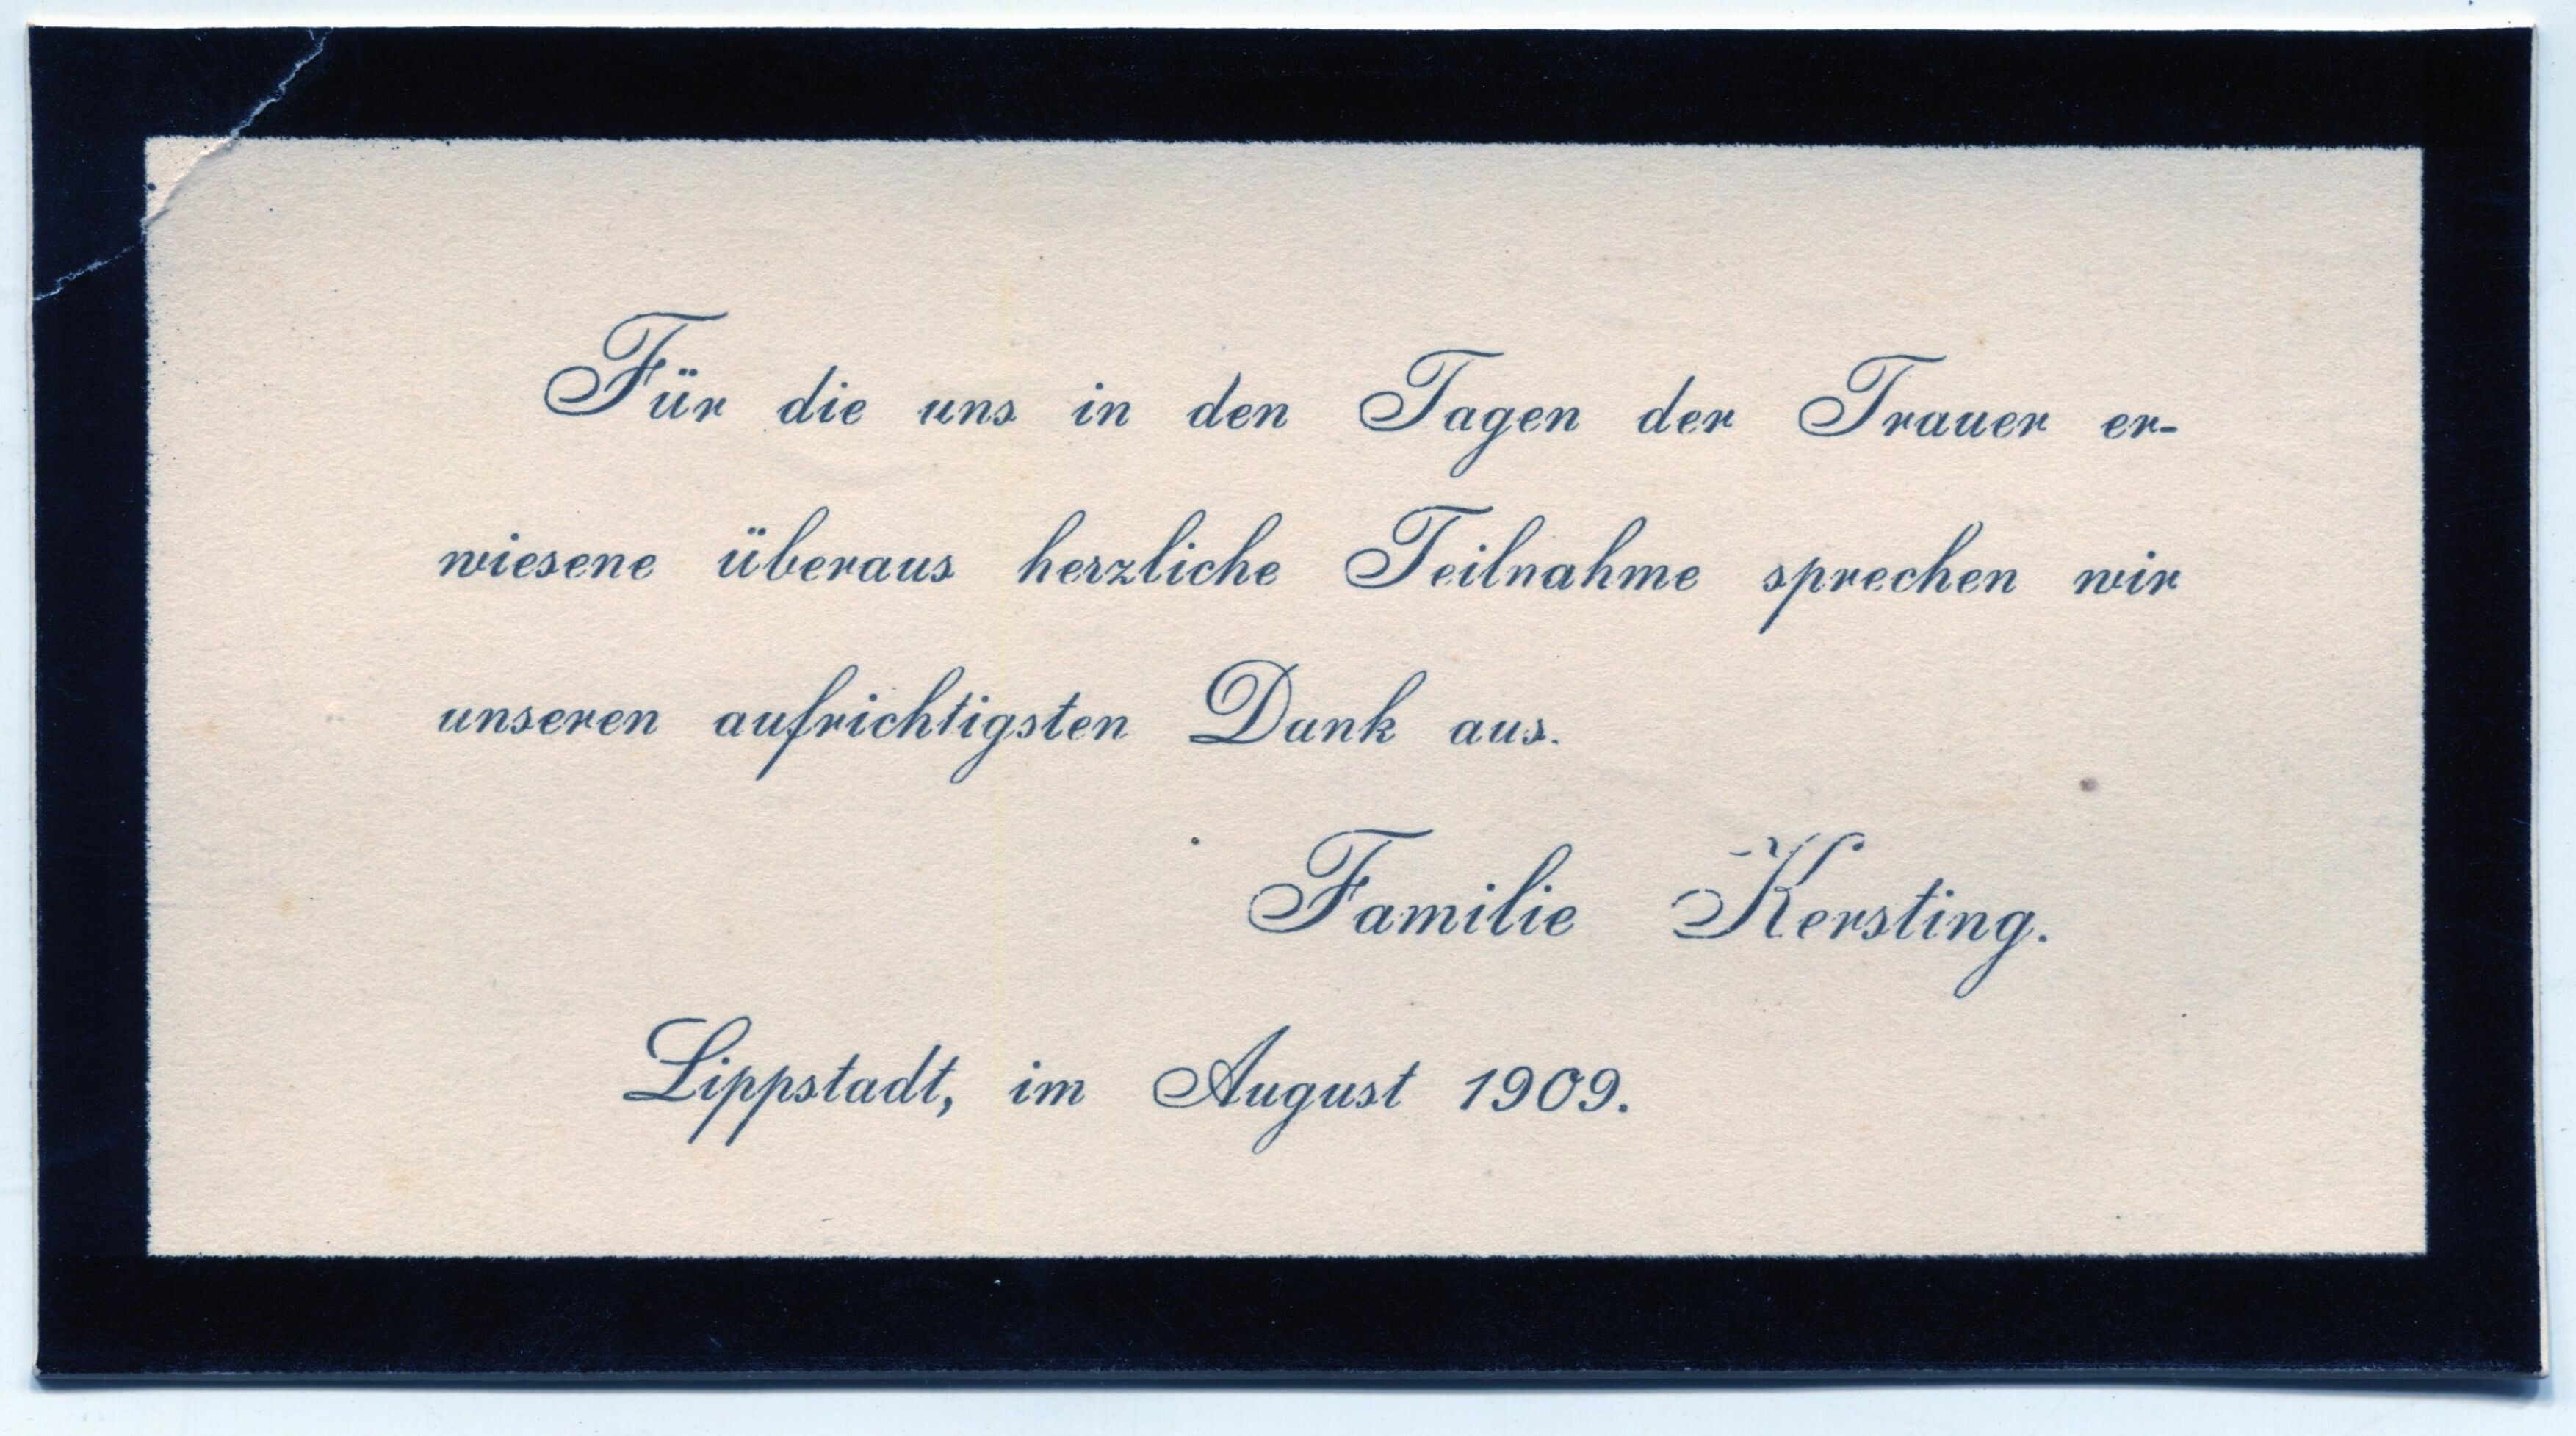 Danksagung für Kondolenz 1909 (Stadtmuseum Lippstadt RR-F)